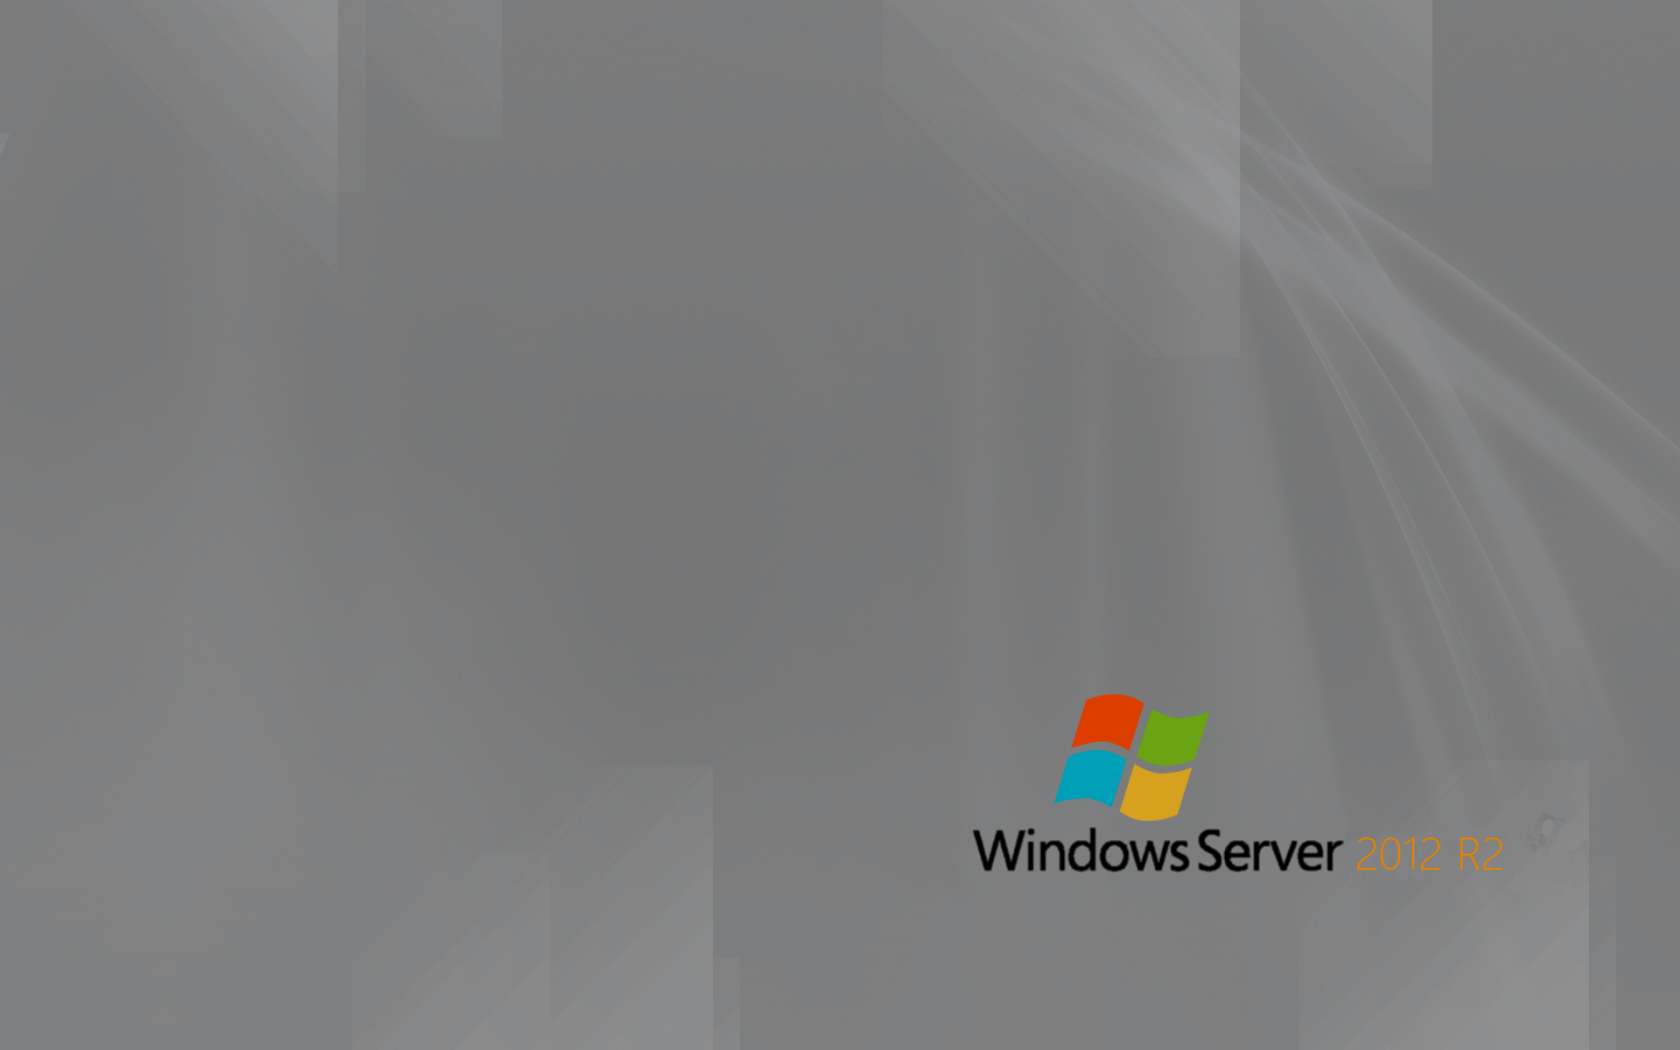 Windows Server 2012 R2 Wallpaper 1920x1200 Wallpapers Wallpapers